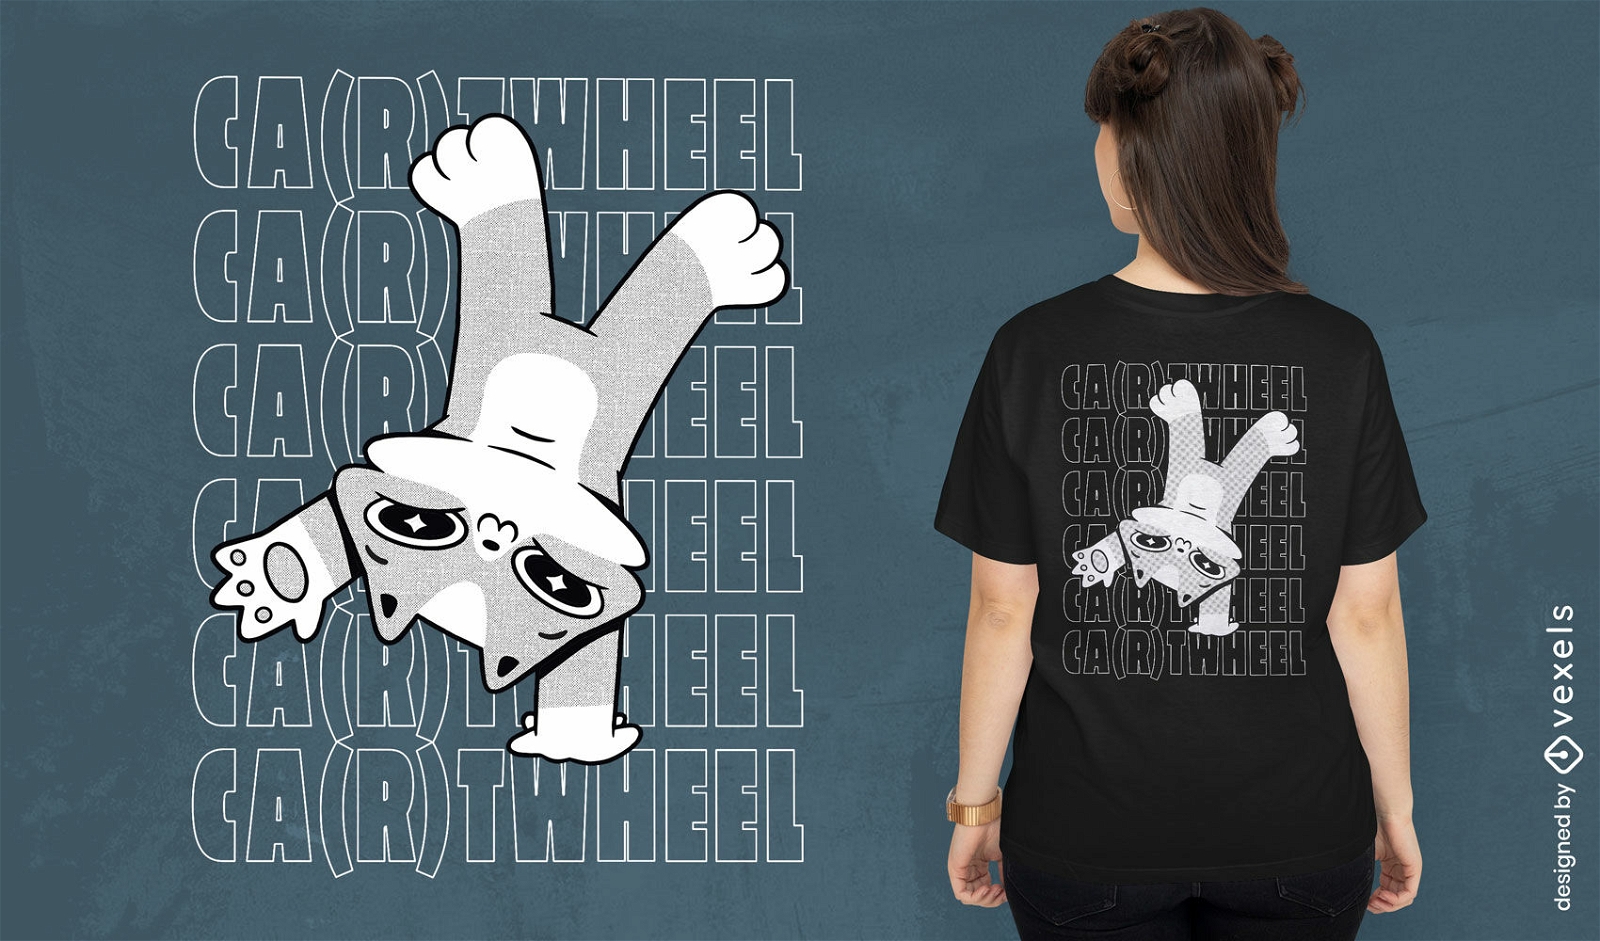 Cat cartwheel cartoon t-shirt design